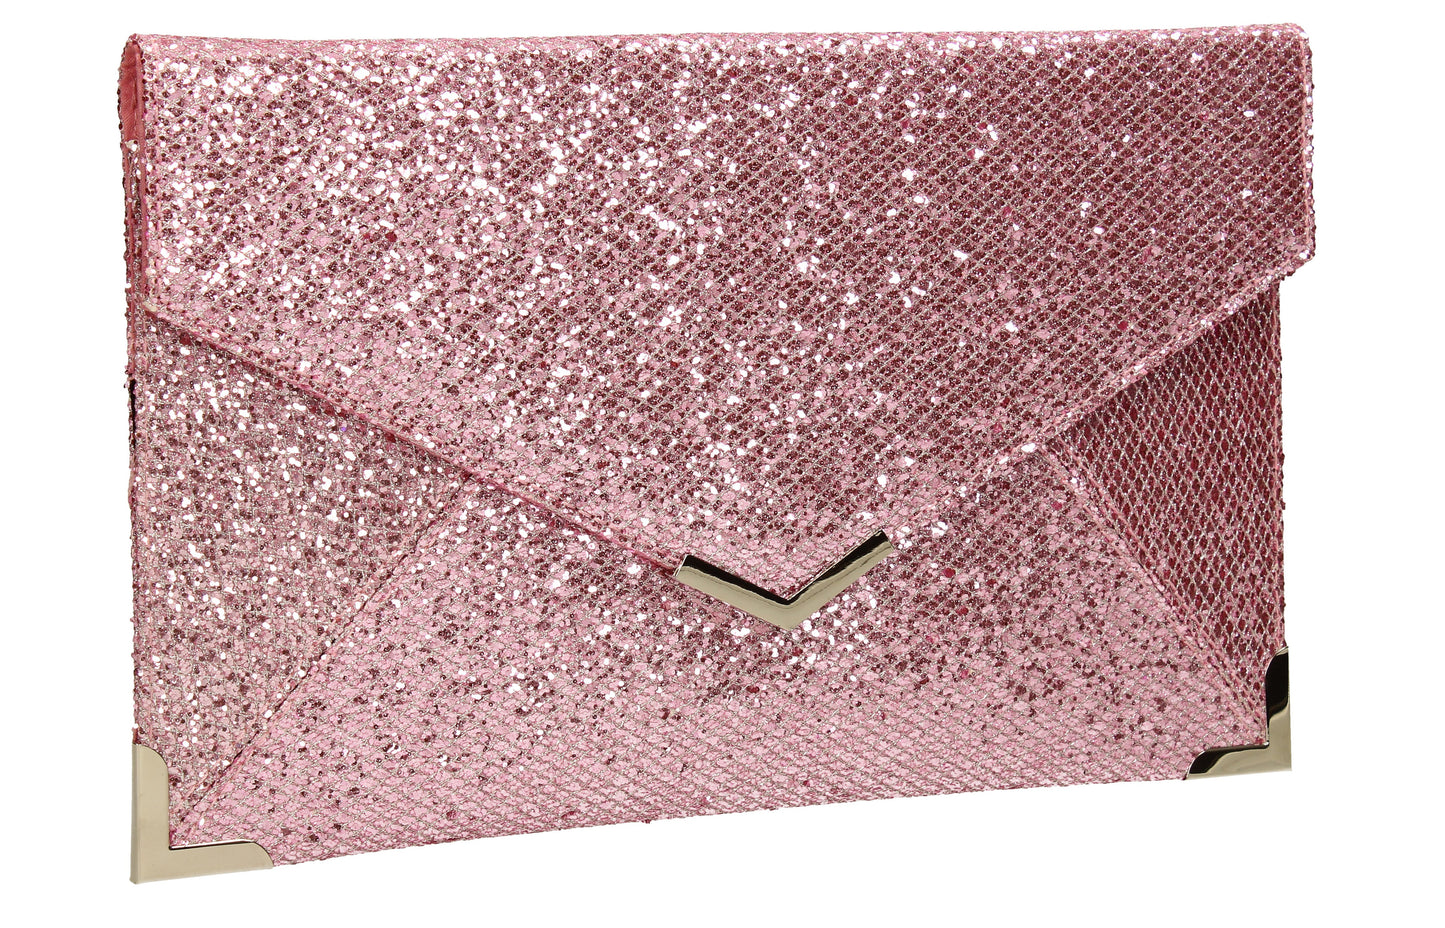 SWANKYSWANS Korie Clutch Bag Pink Cute Cheap Clutch Bag For Weddings School and Work